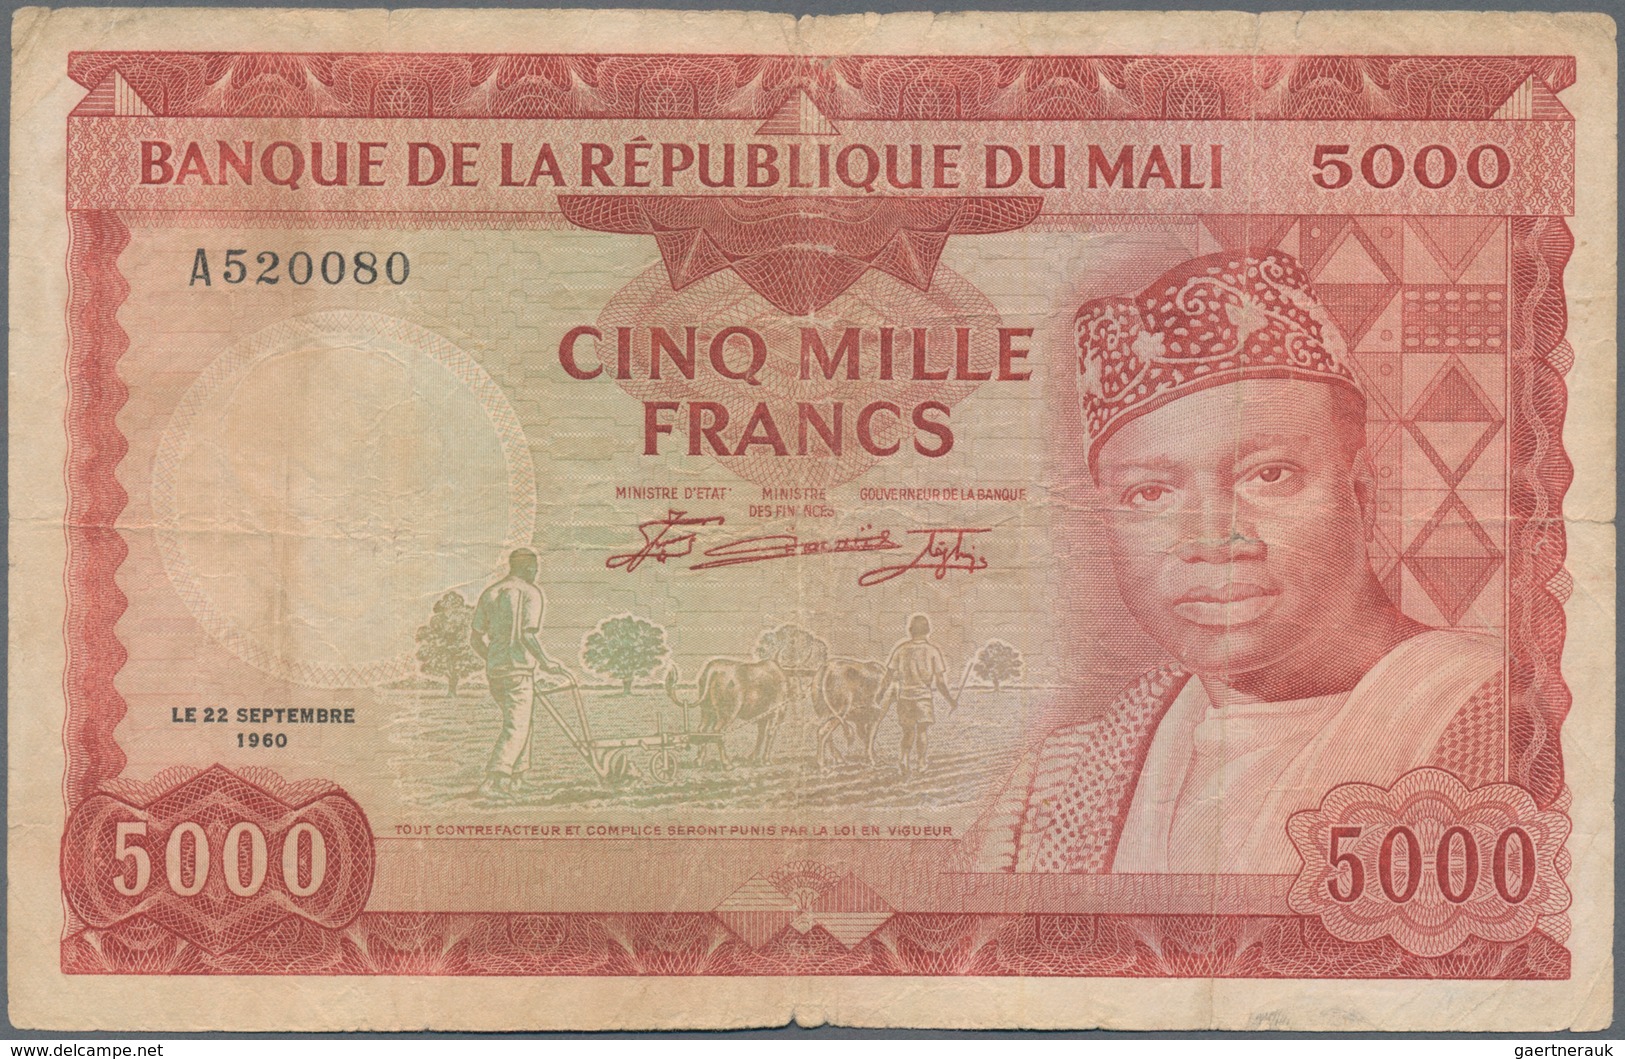 Mali: Very nice set with 5 banknotes Banque de la République du Mali with 100 and 5000 Francs first